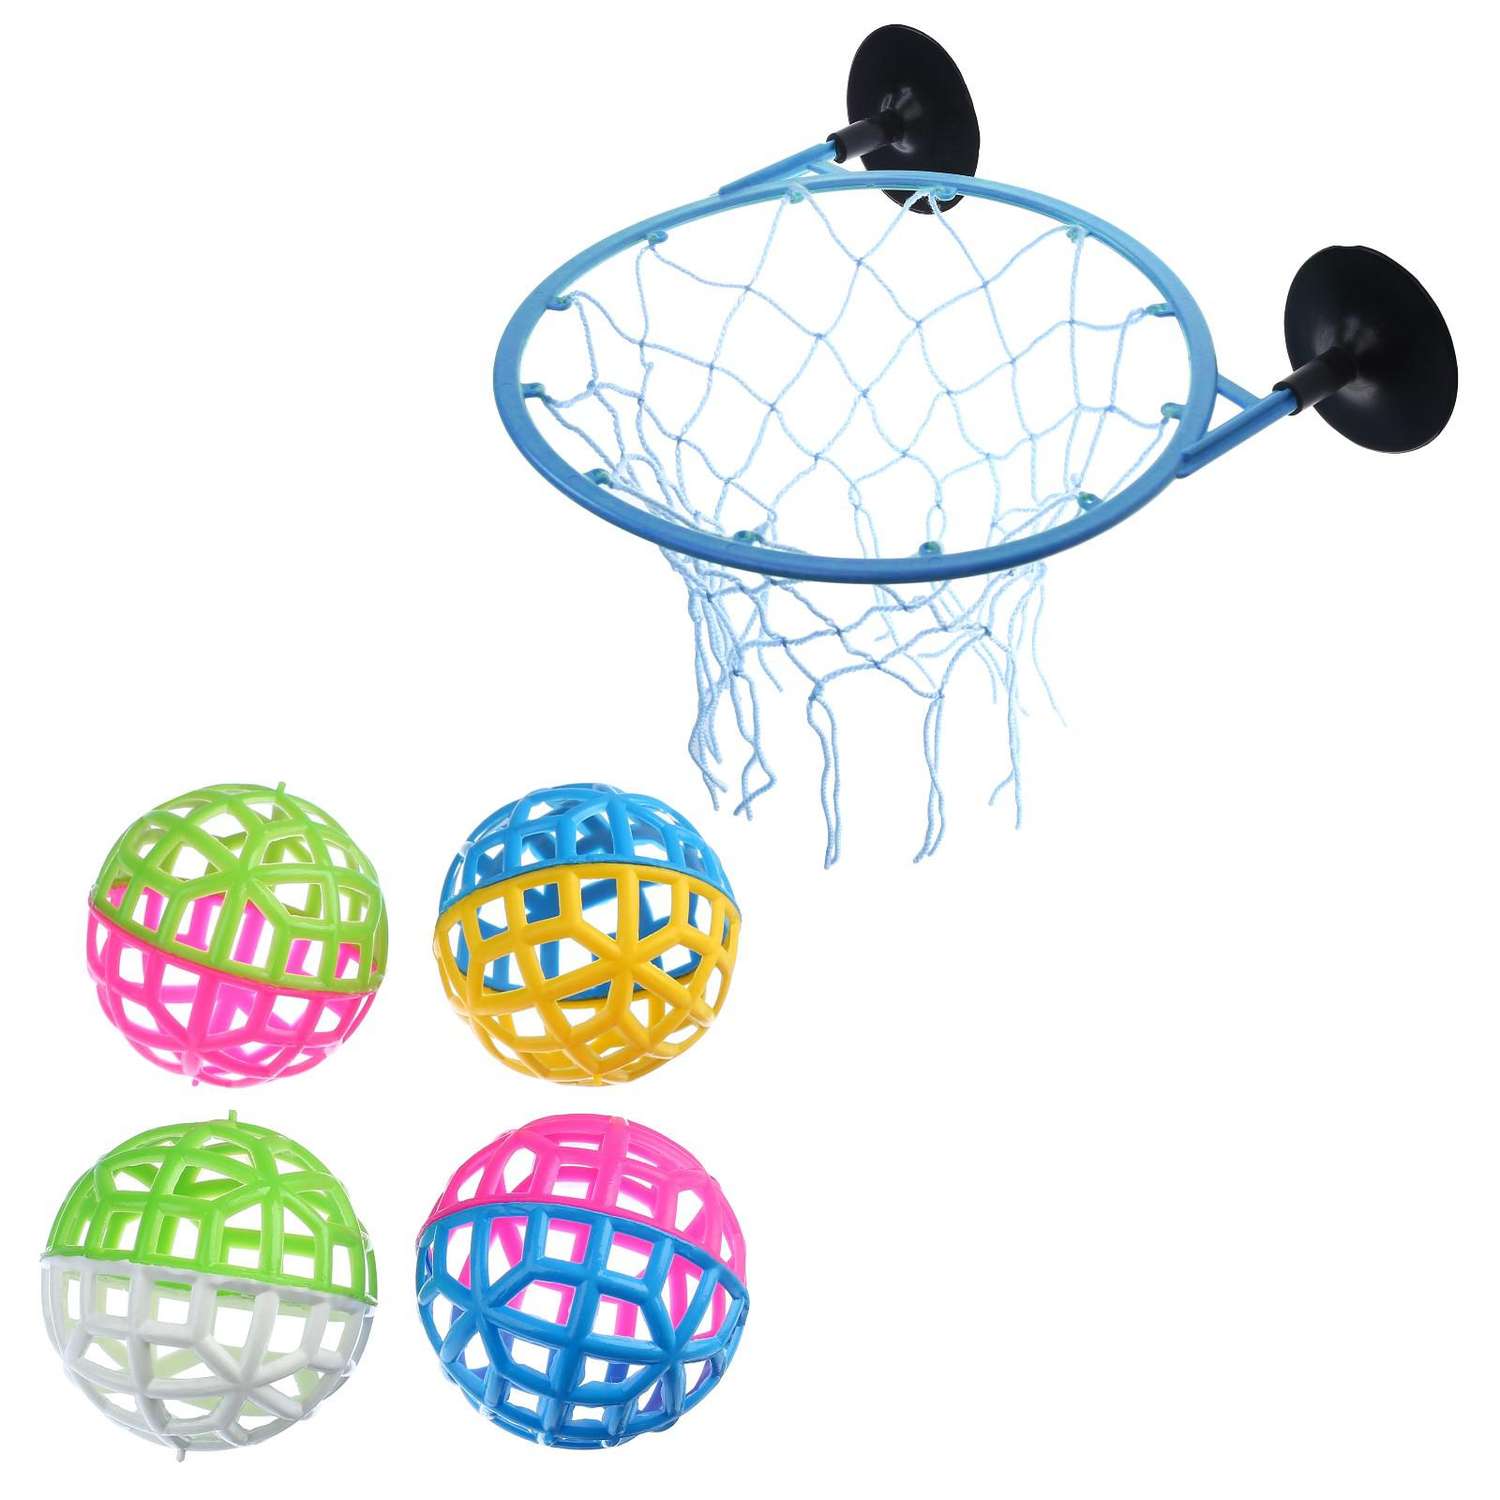 Набор Sima-Land для игры «Мини-баскетбол» детский 20.4х1х2 см кольцо d-21 см 4 мяча d-9 см - фото 1